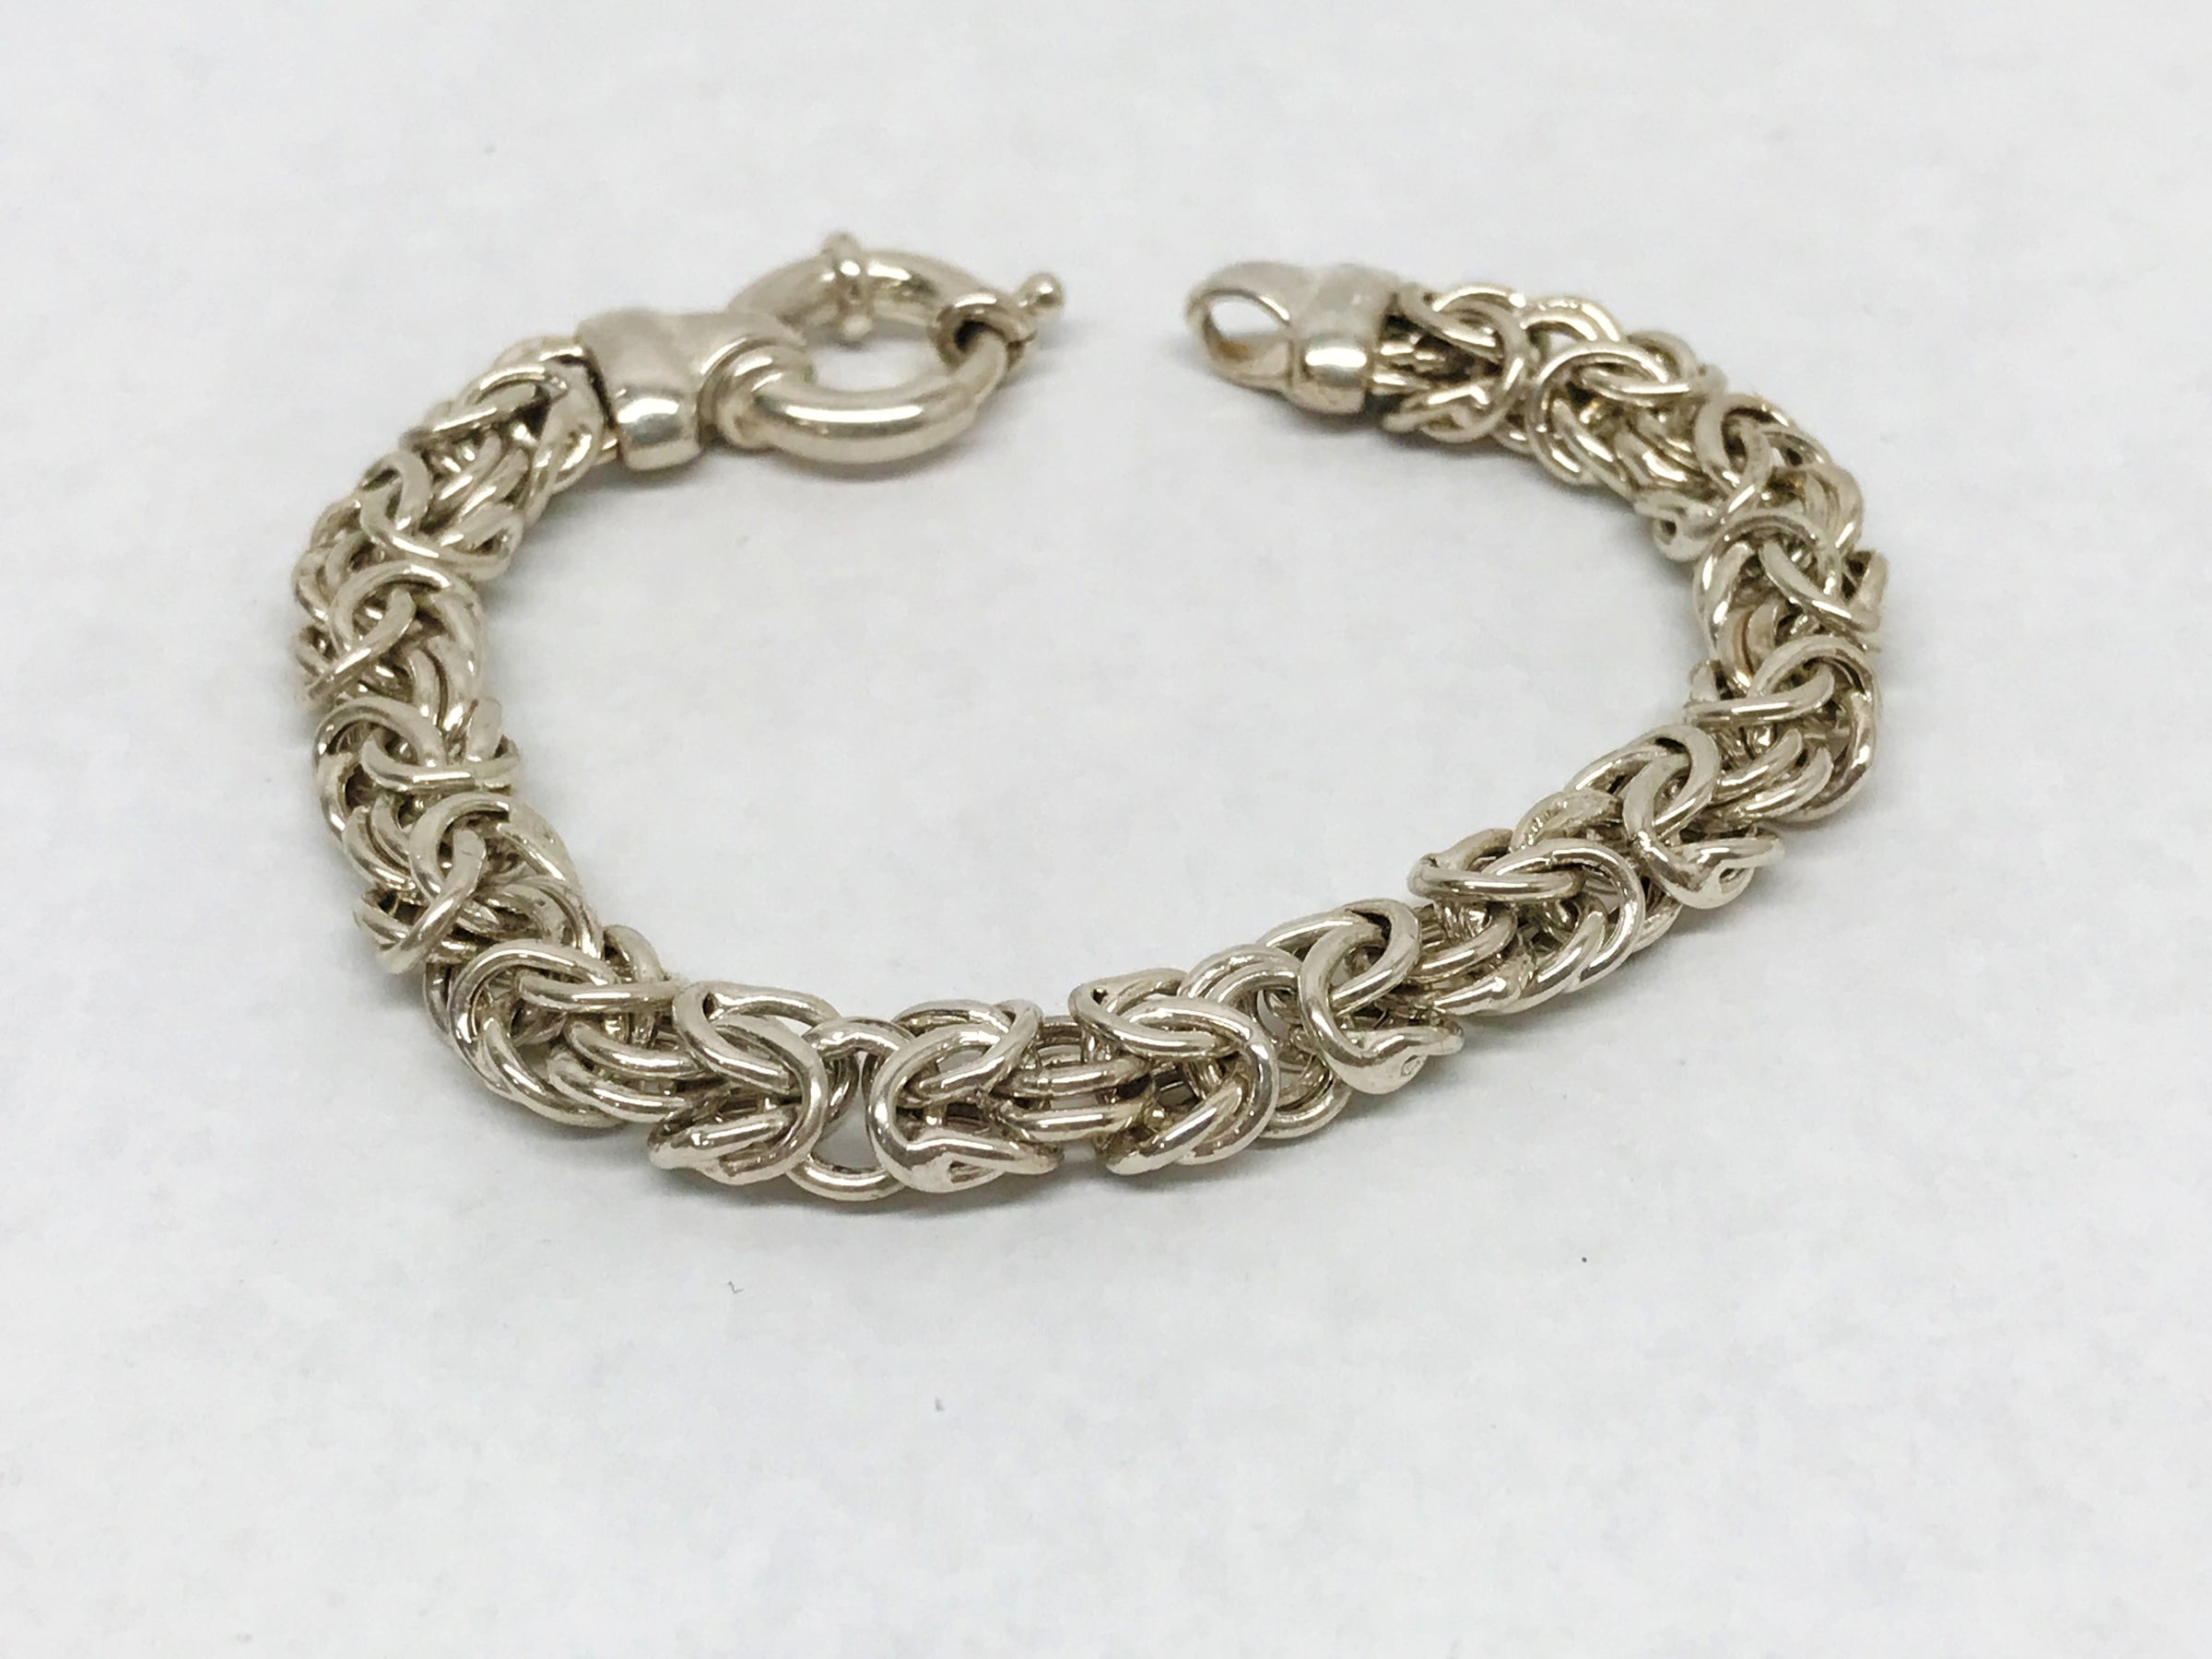 www.hersandhistreasures.com/products/byzantine-925-sterling-silver-bracelet-italy